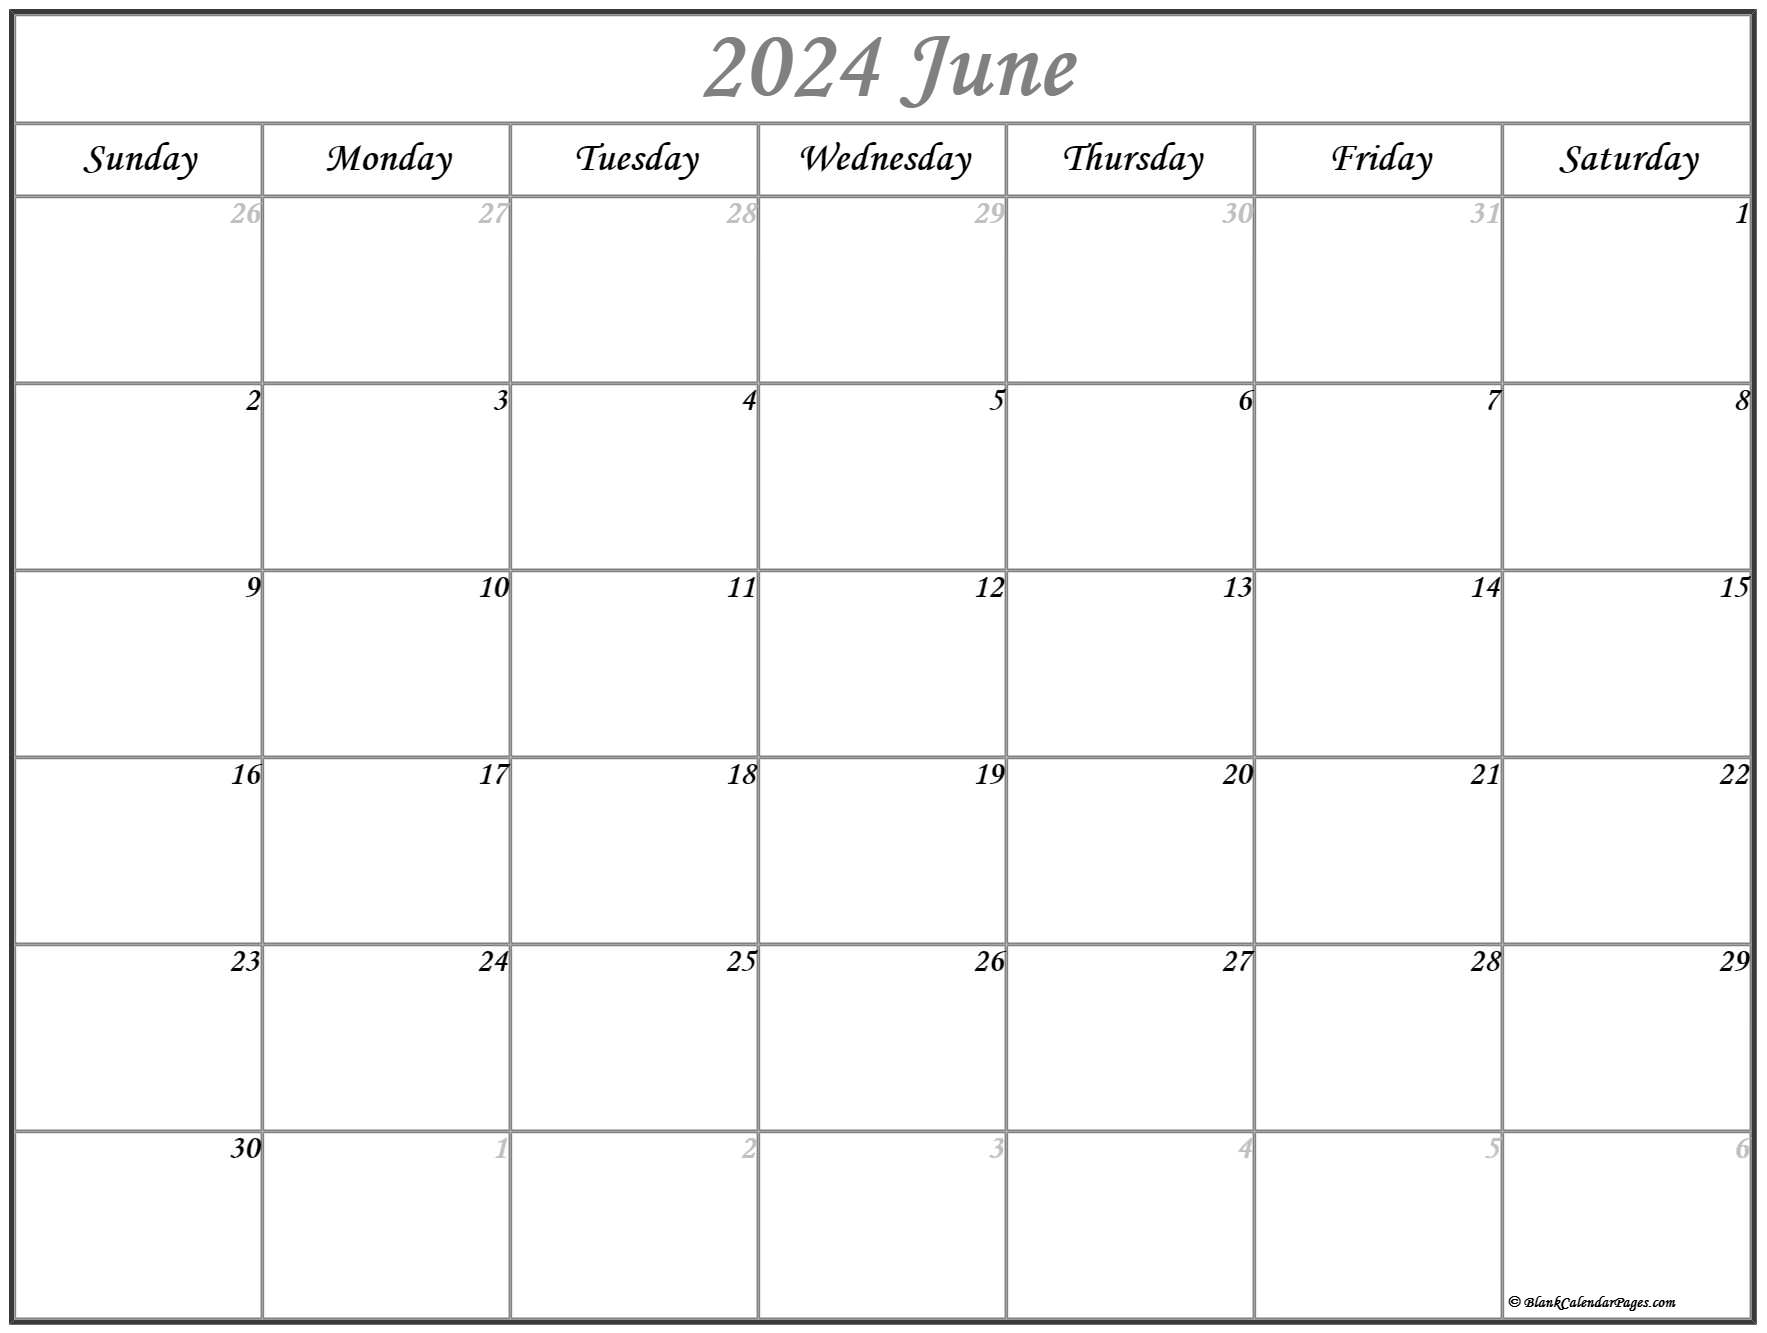 June 2021 calendar | free printable calendar templates